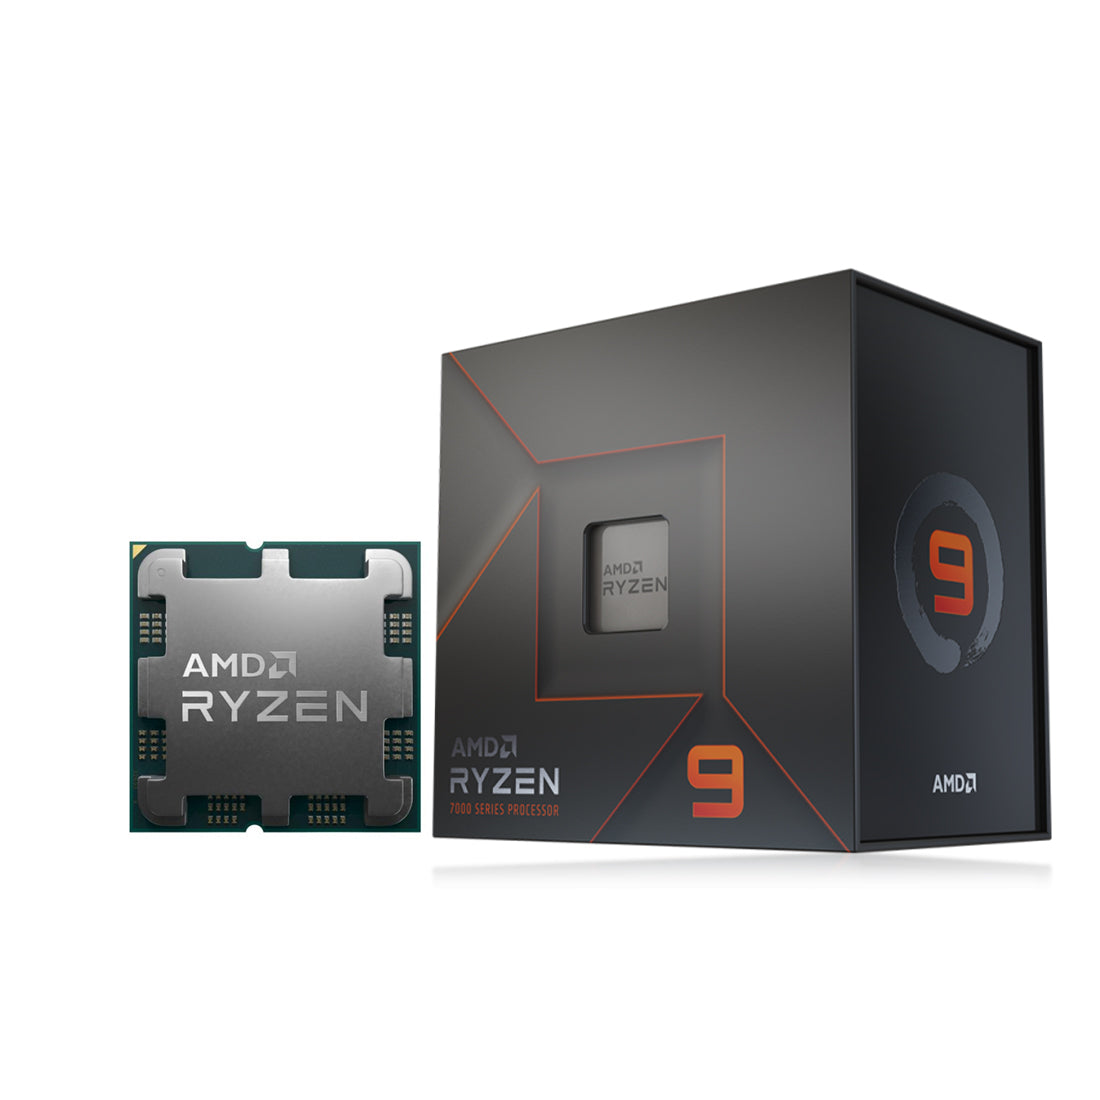 AMD Ryzen 9 7900X डेस्कटॉप प्रोसेसर 12 कोर 5.6GHz तक 76MB कैश AM5 सॉकेट Radeon ग्राफ़िक्स के साथ